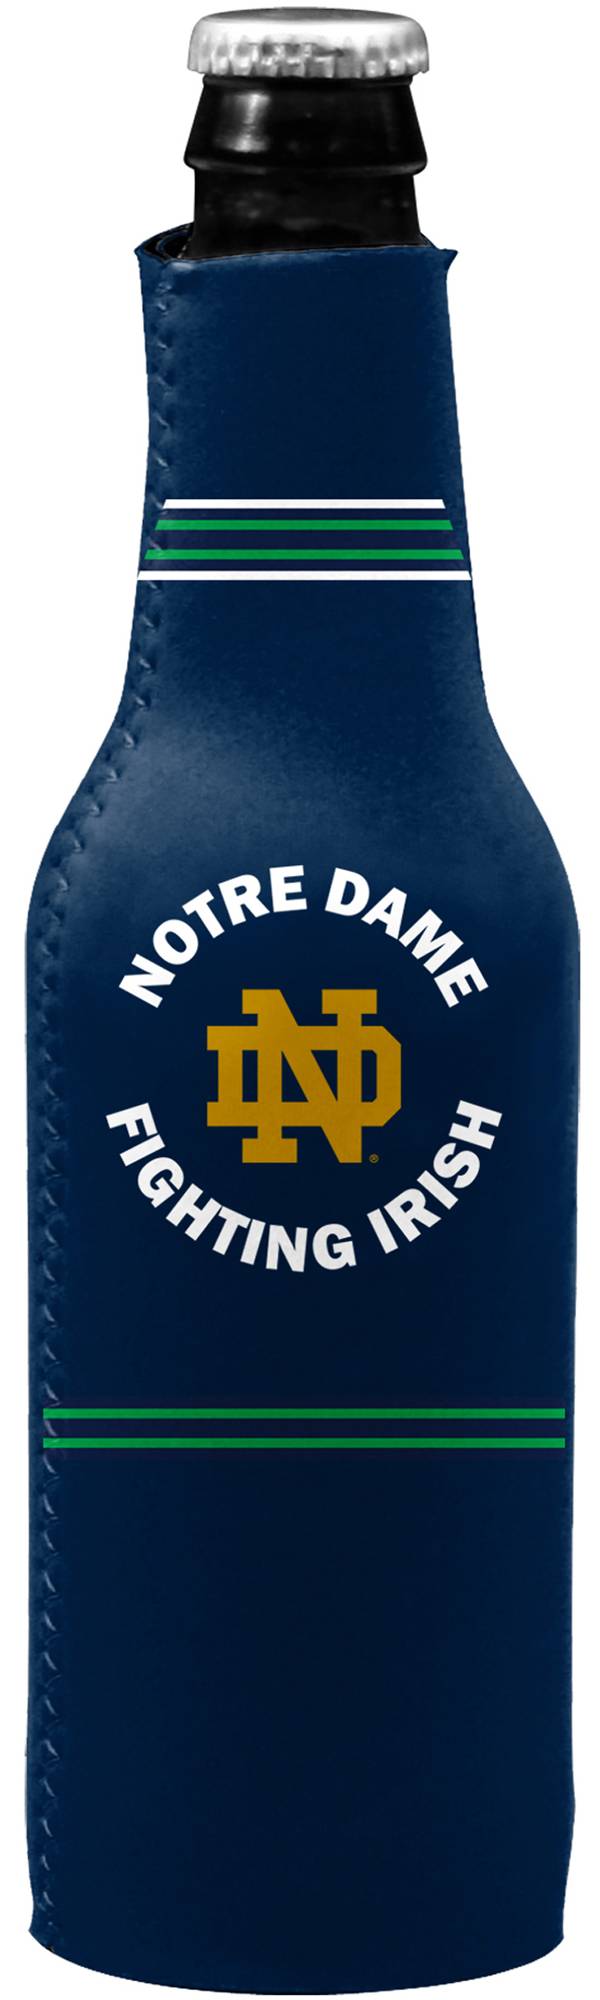 Notre Dame Fighting Irish Bottle Koozie product image